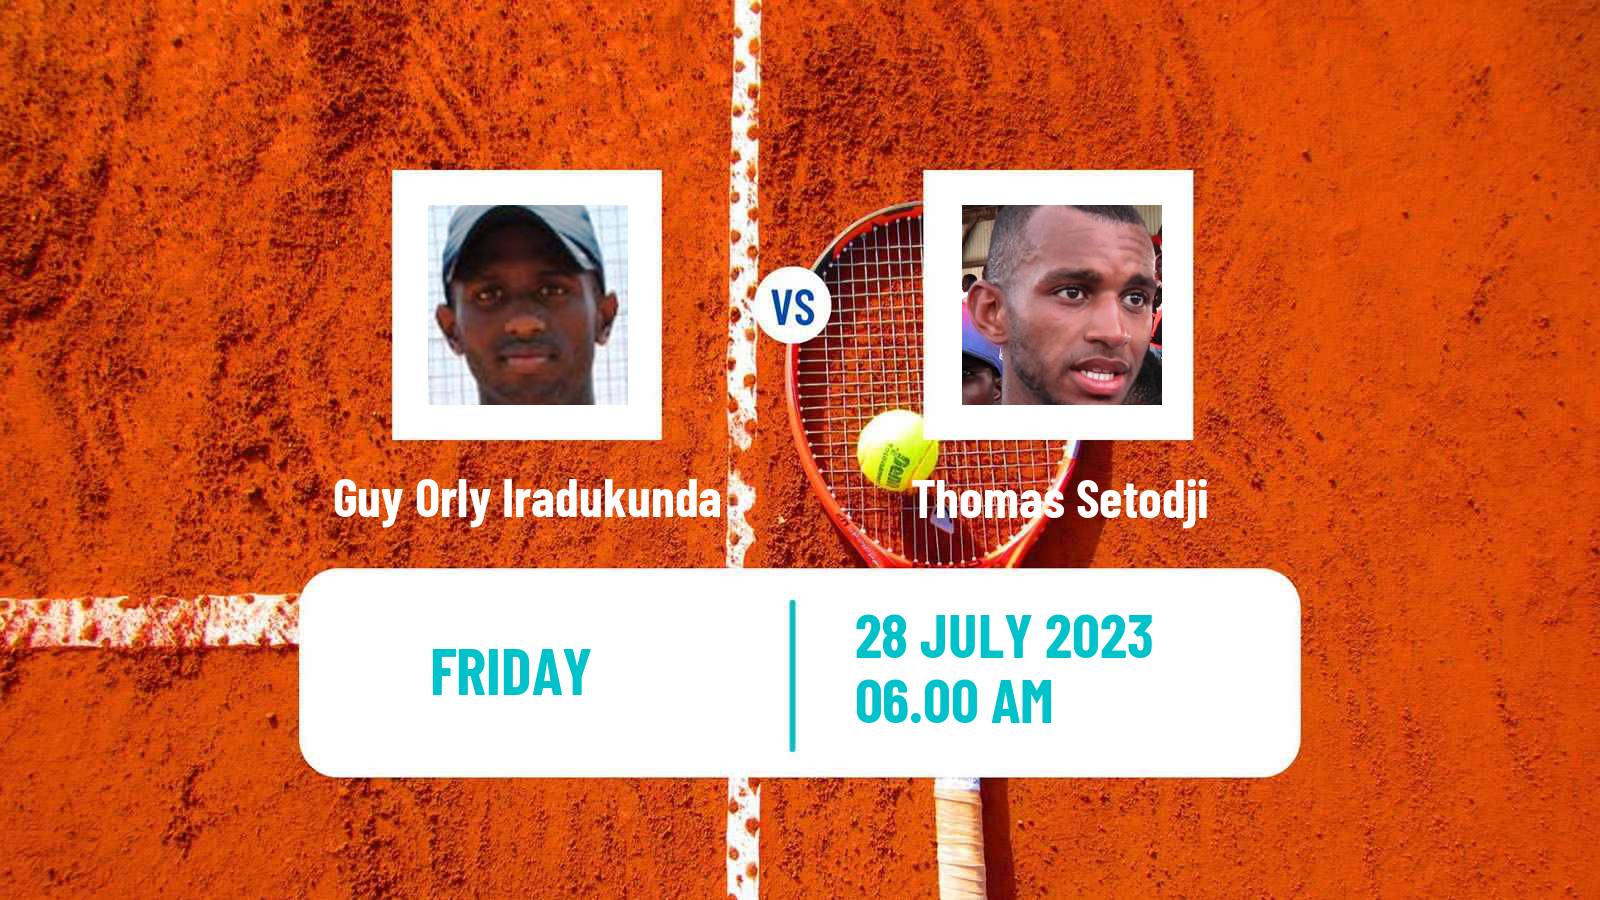 Tennis ITF M25 Brazzaville 2 Men Guy Orly Iradukunda - Thomas Setodji